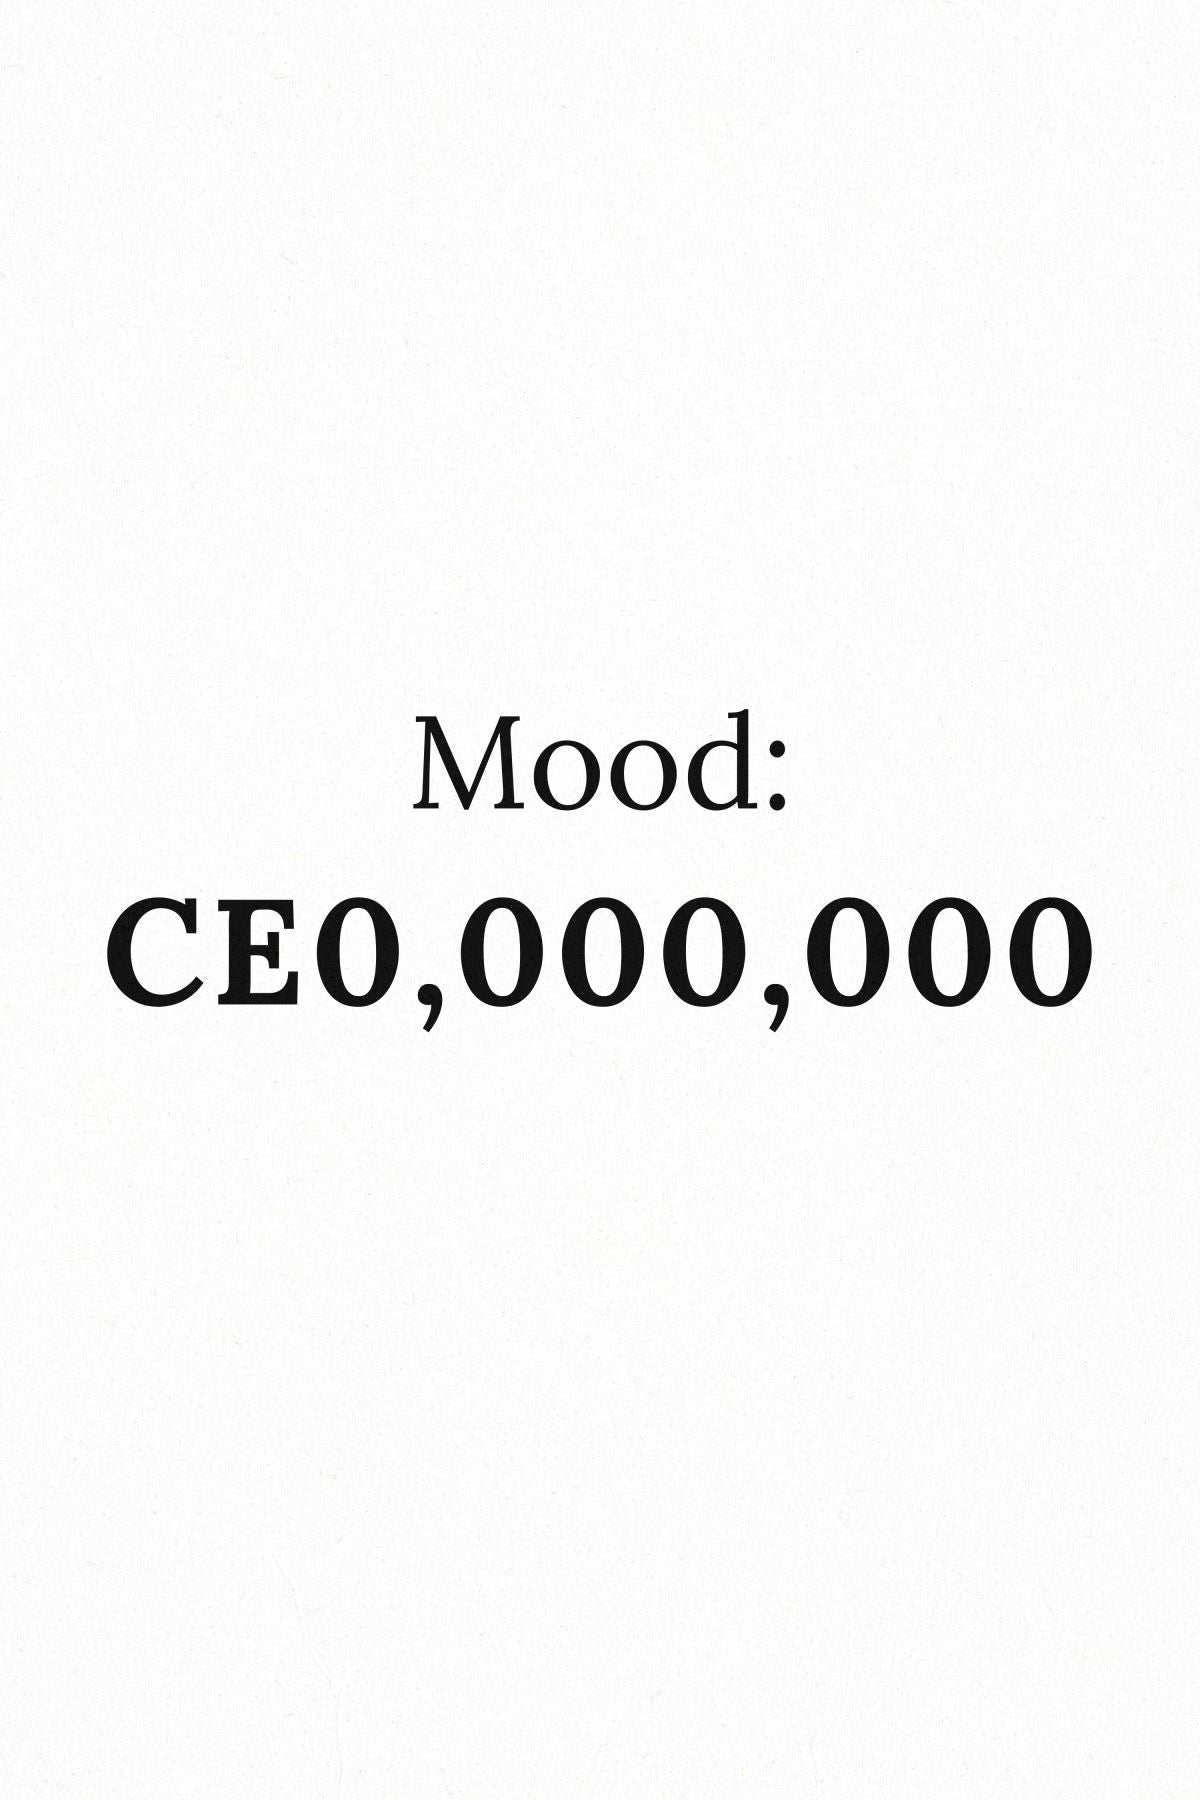 CEO Mood